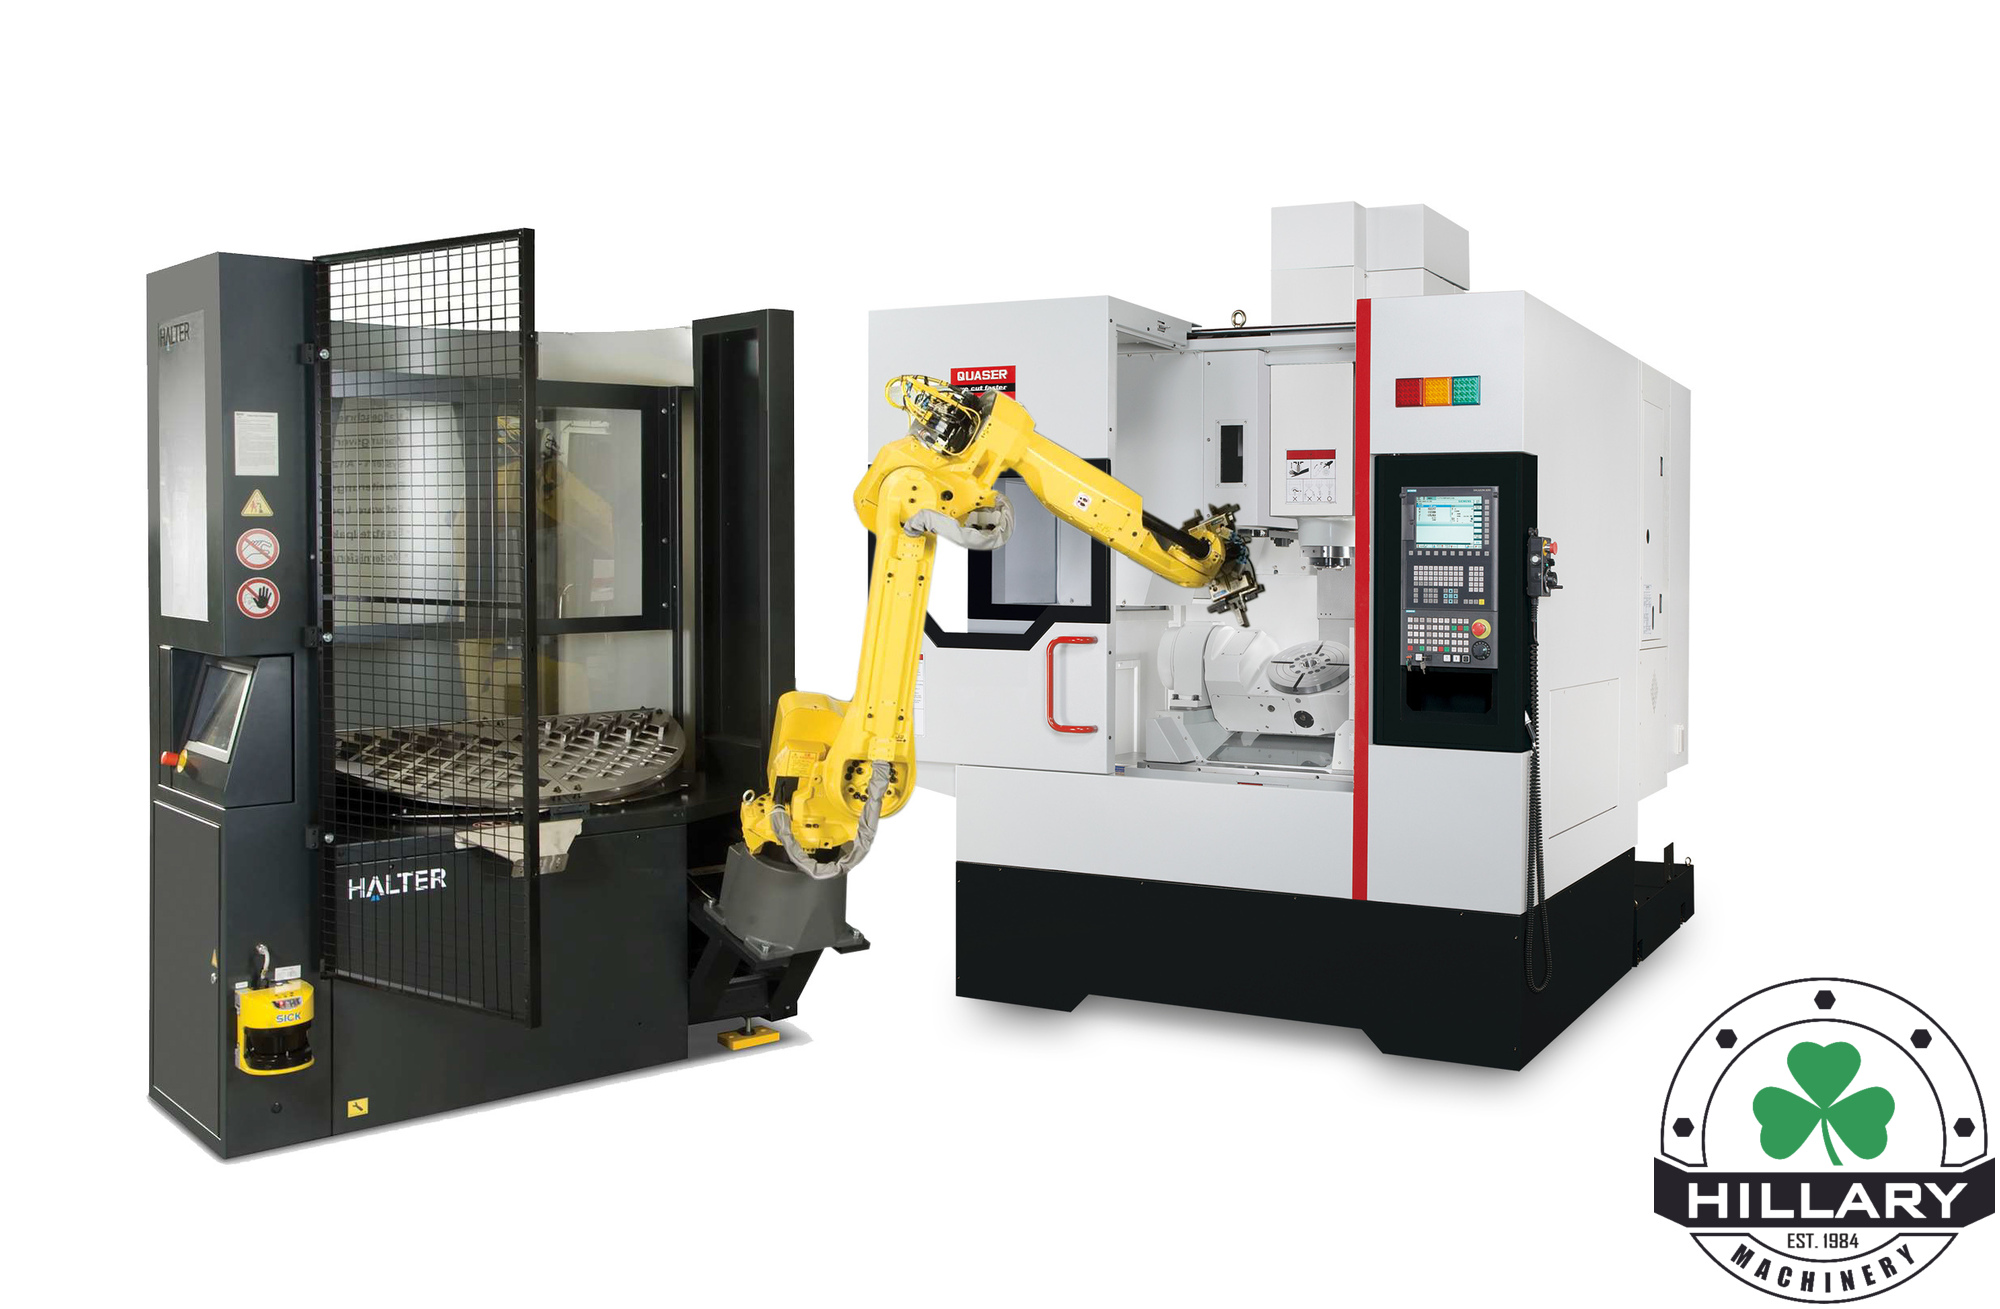 HALTER CNC AUTOMATION Millstacker Big 35/70 Robot Machine Tending Systems | Hillary Machinery